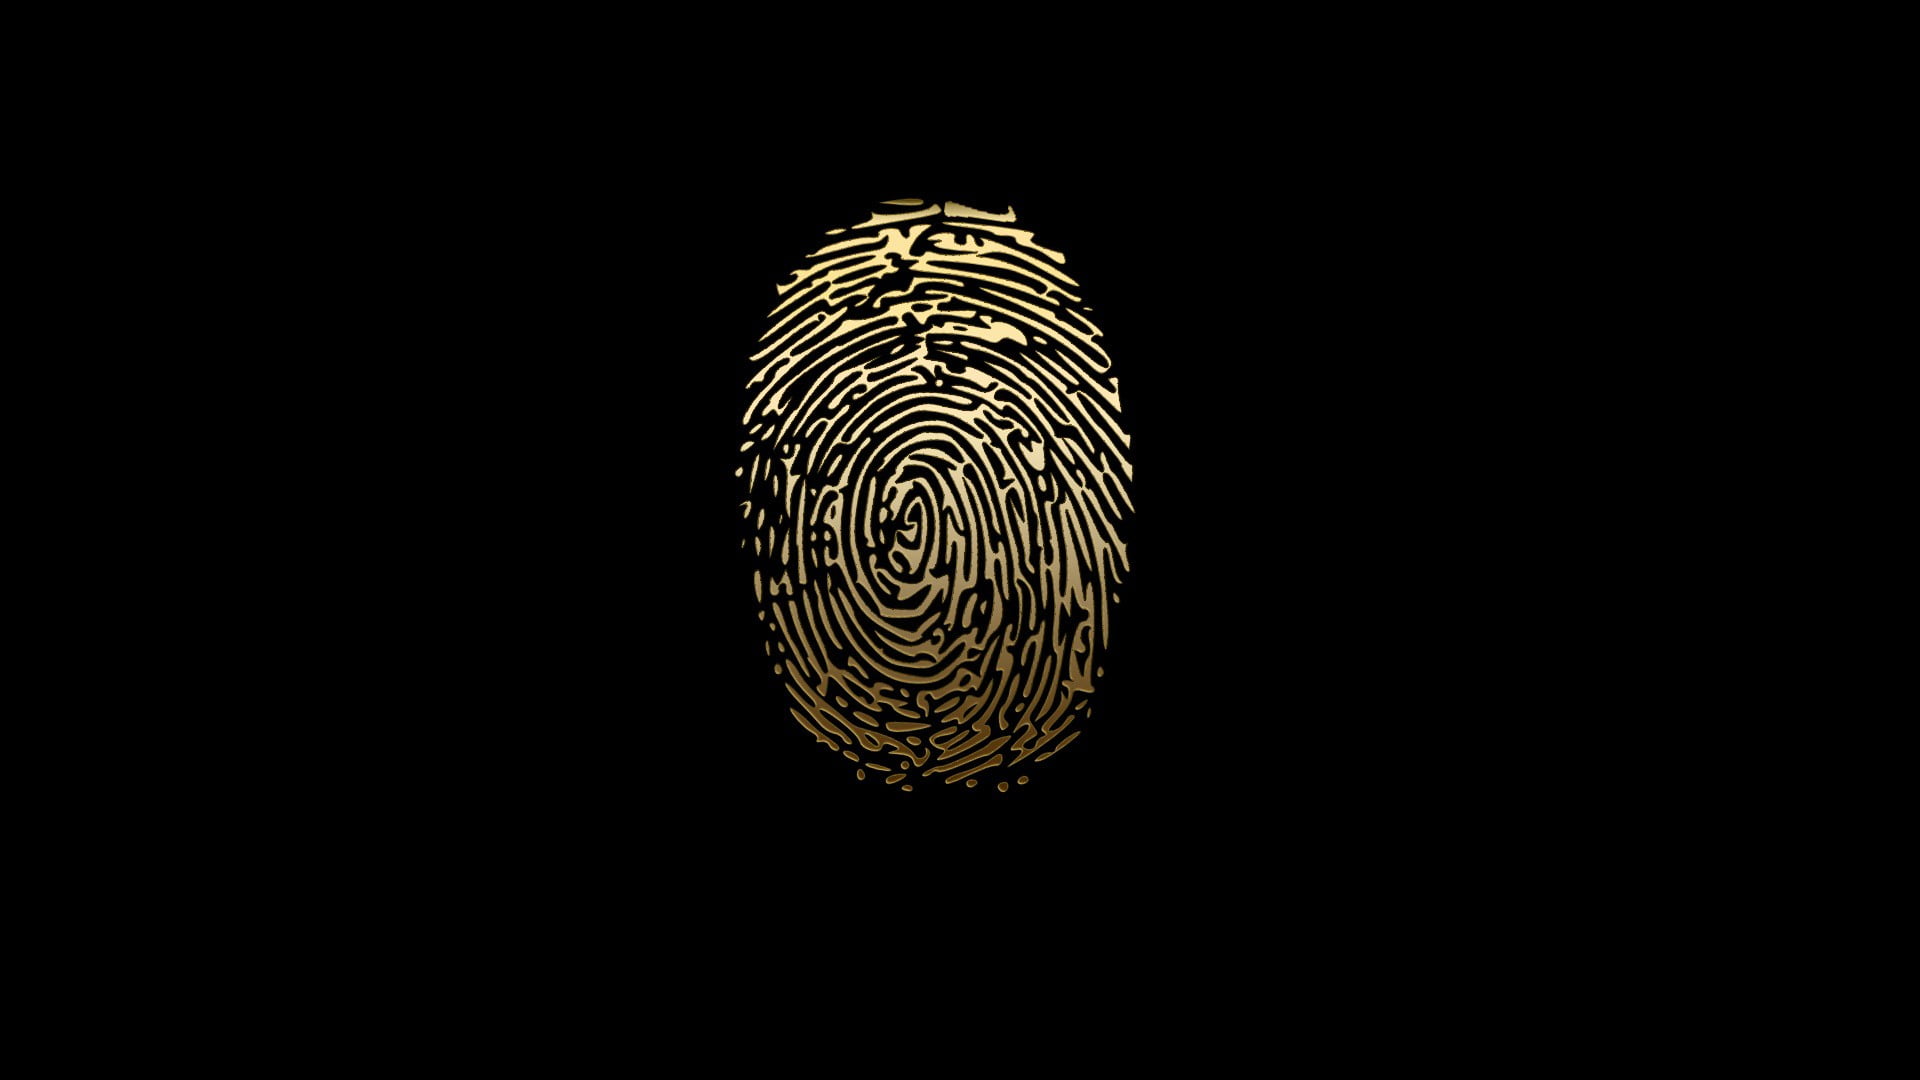 fingerprint, data, biometrics, copy space, studio shot, black background